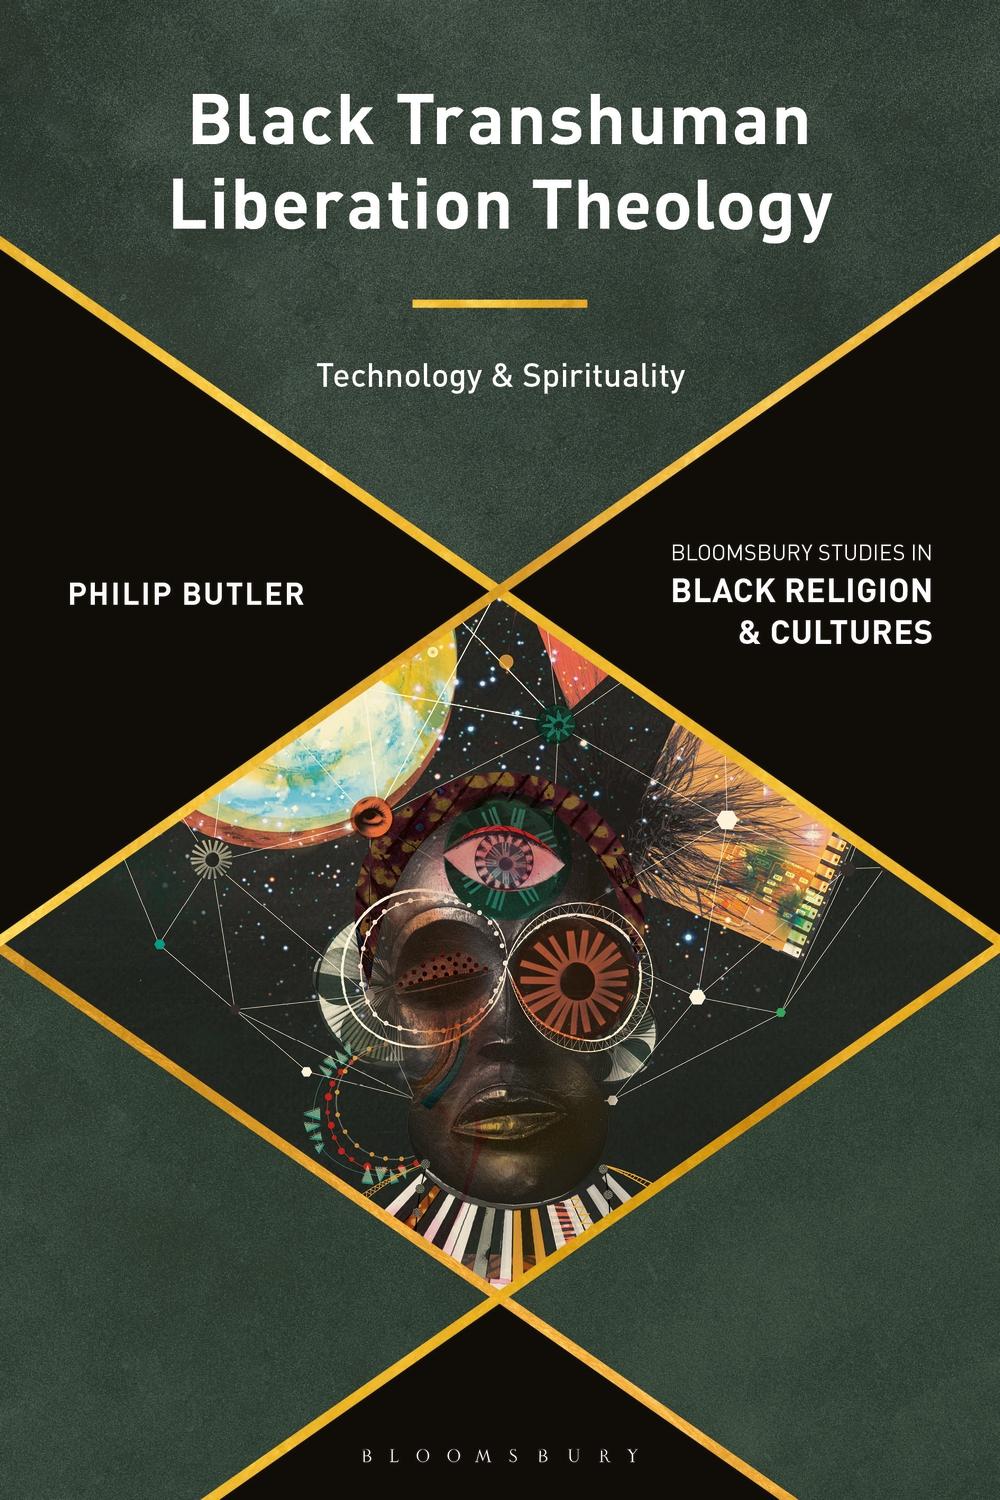 Black Transhuman Liberation Theology - Philip Butler